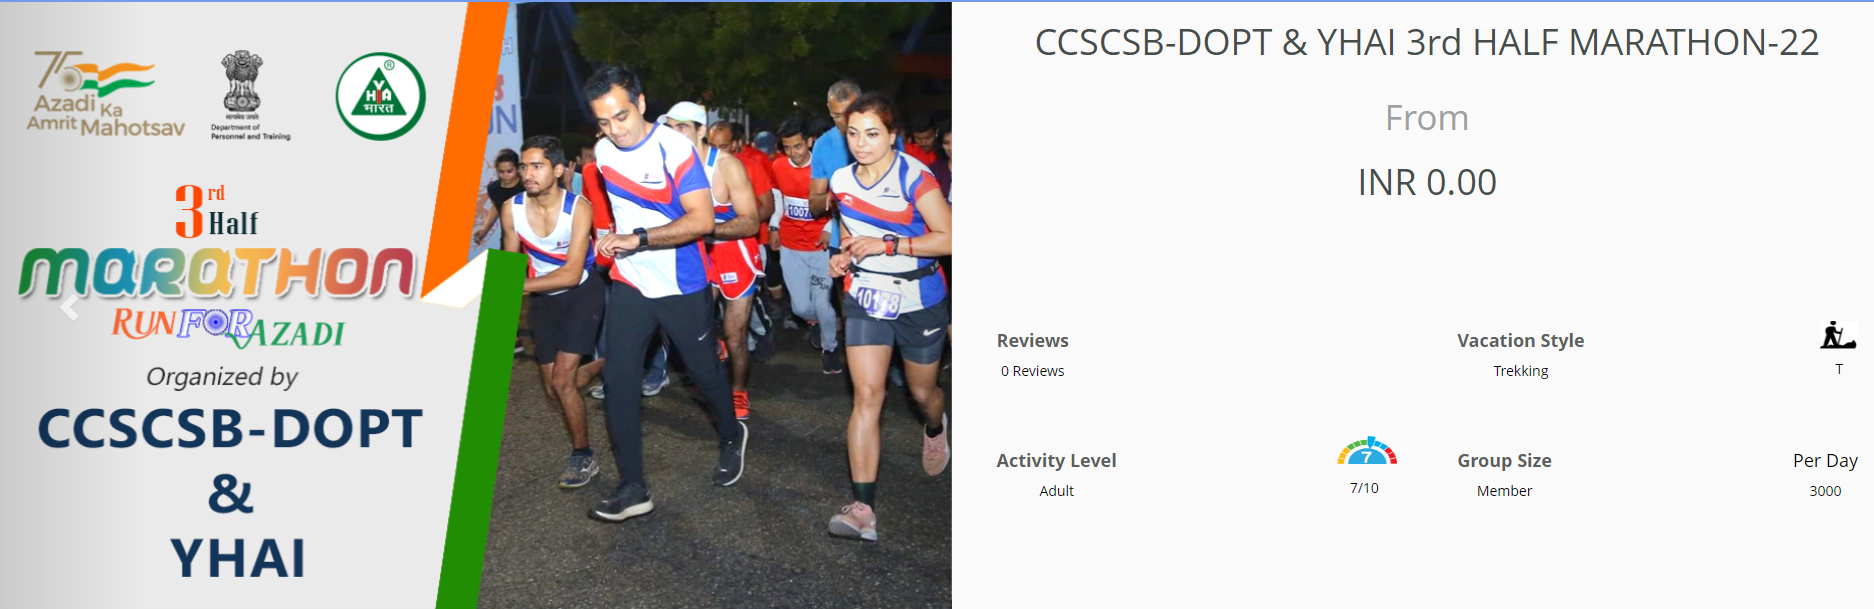 Ccscsb-dopt & Yhai Half Marathon 2022